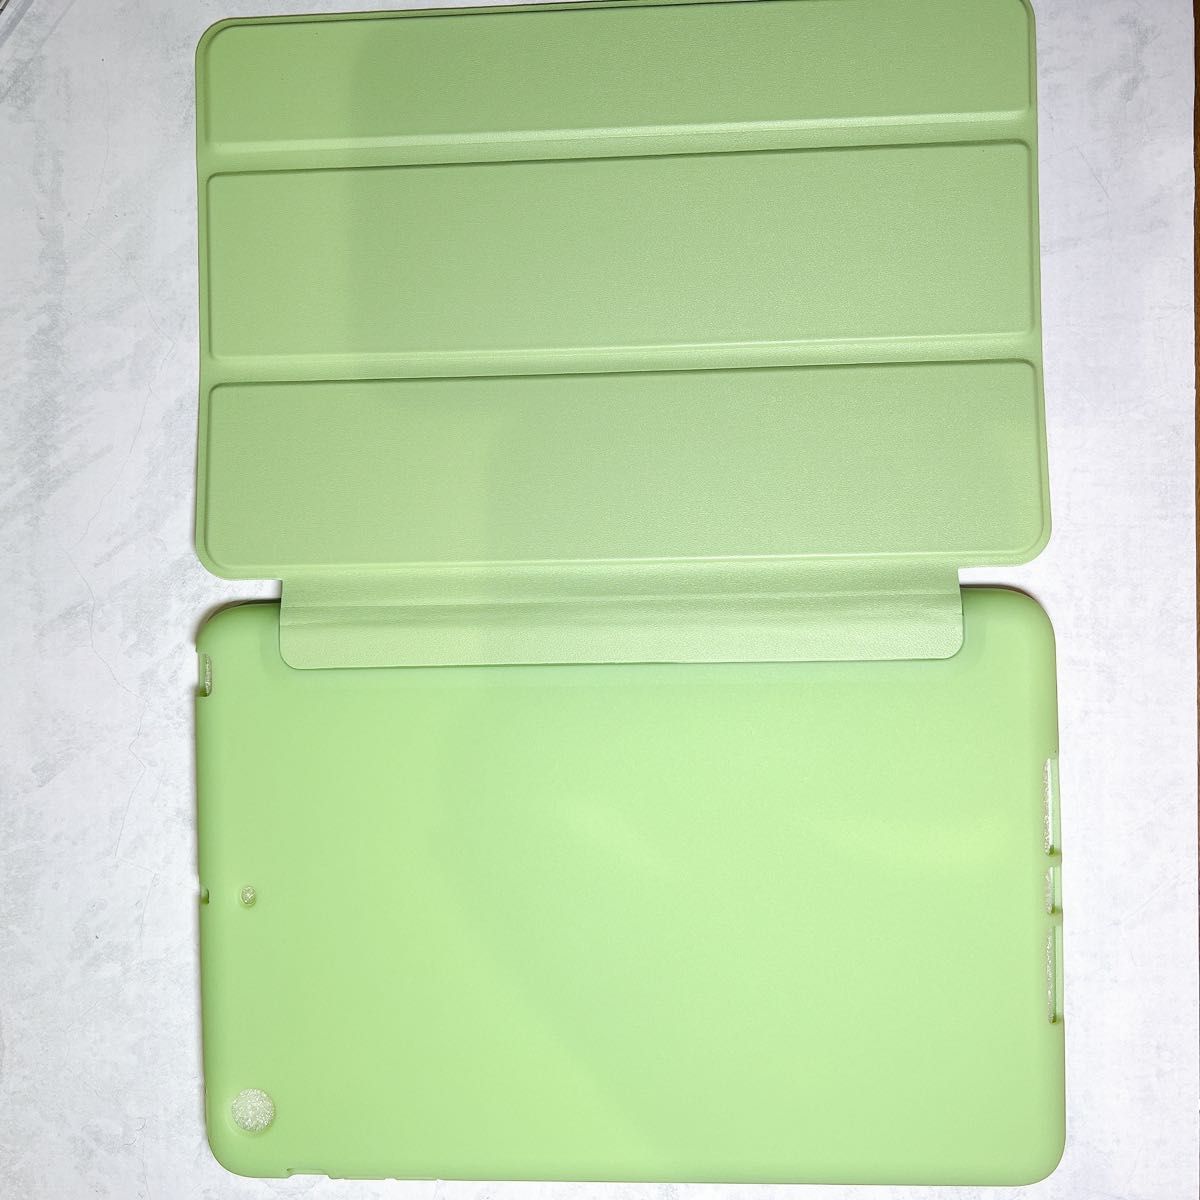  iPad Mini 3/2 / 1 ケース 超薄型TPU ソフトスマートカバー